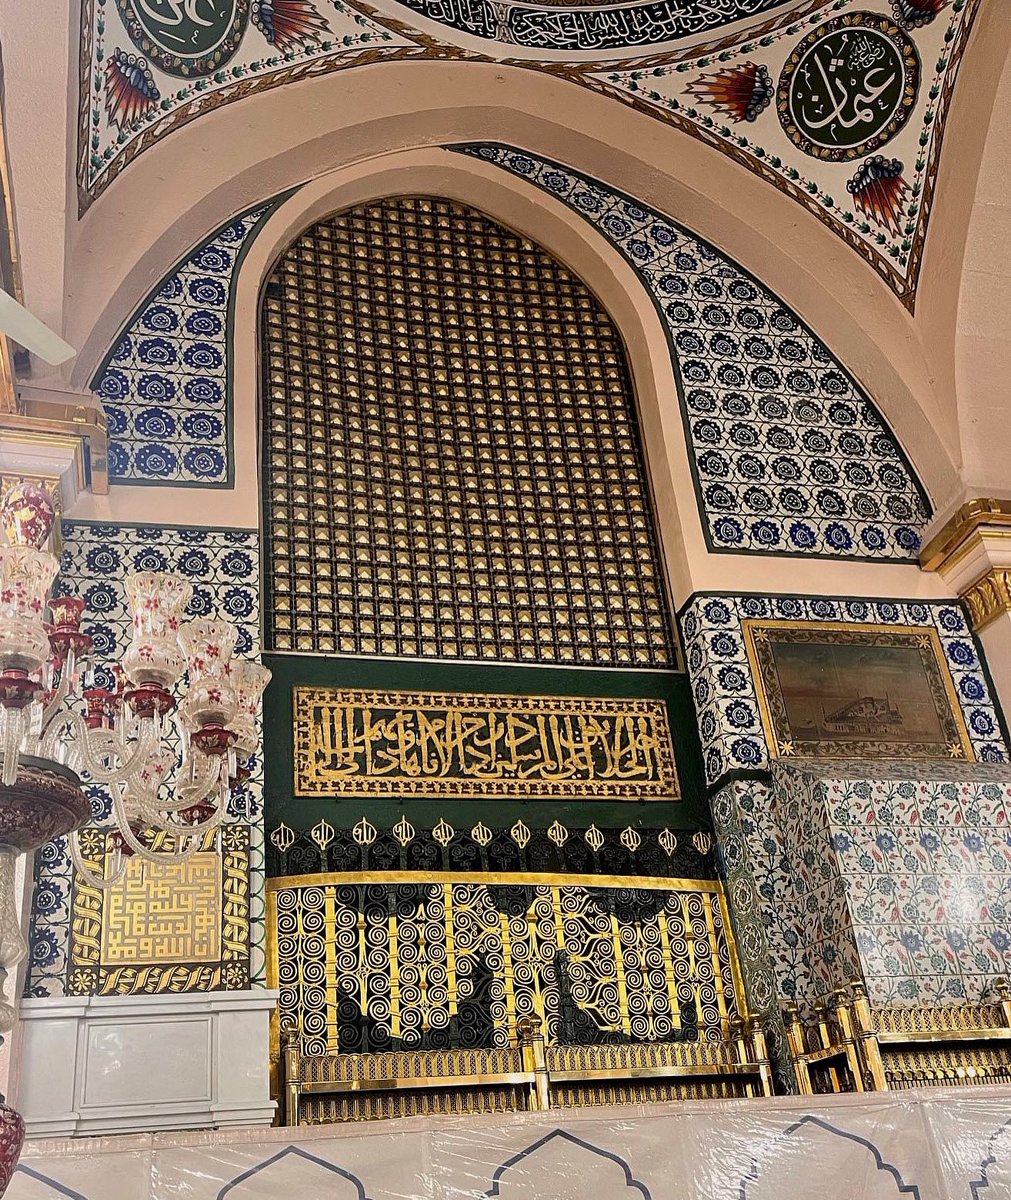 My Peace ❤️
#MasjidAlNabawi #Medina #SaudiArabia